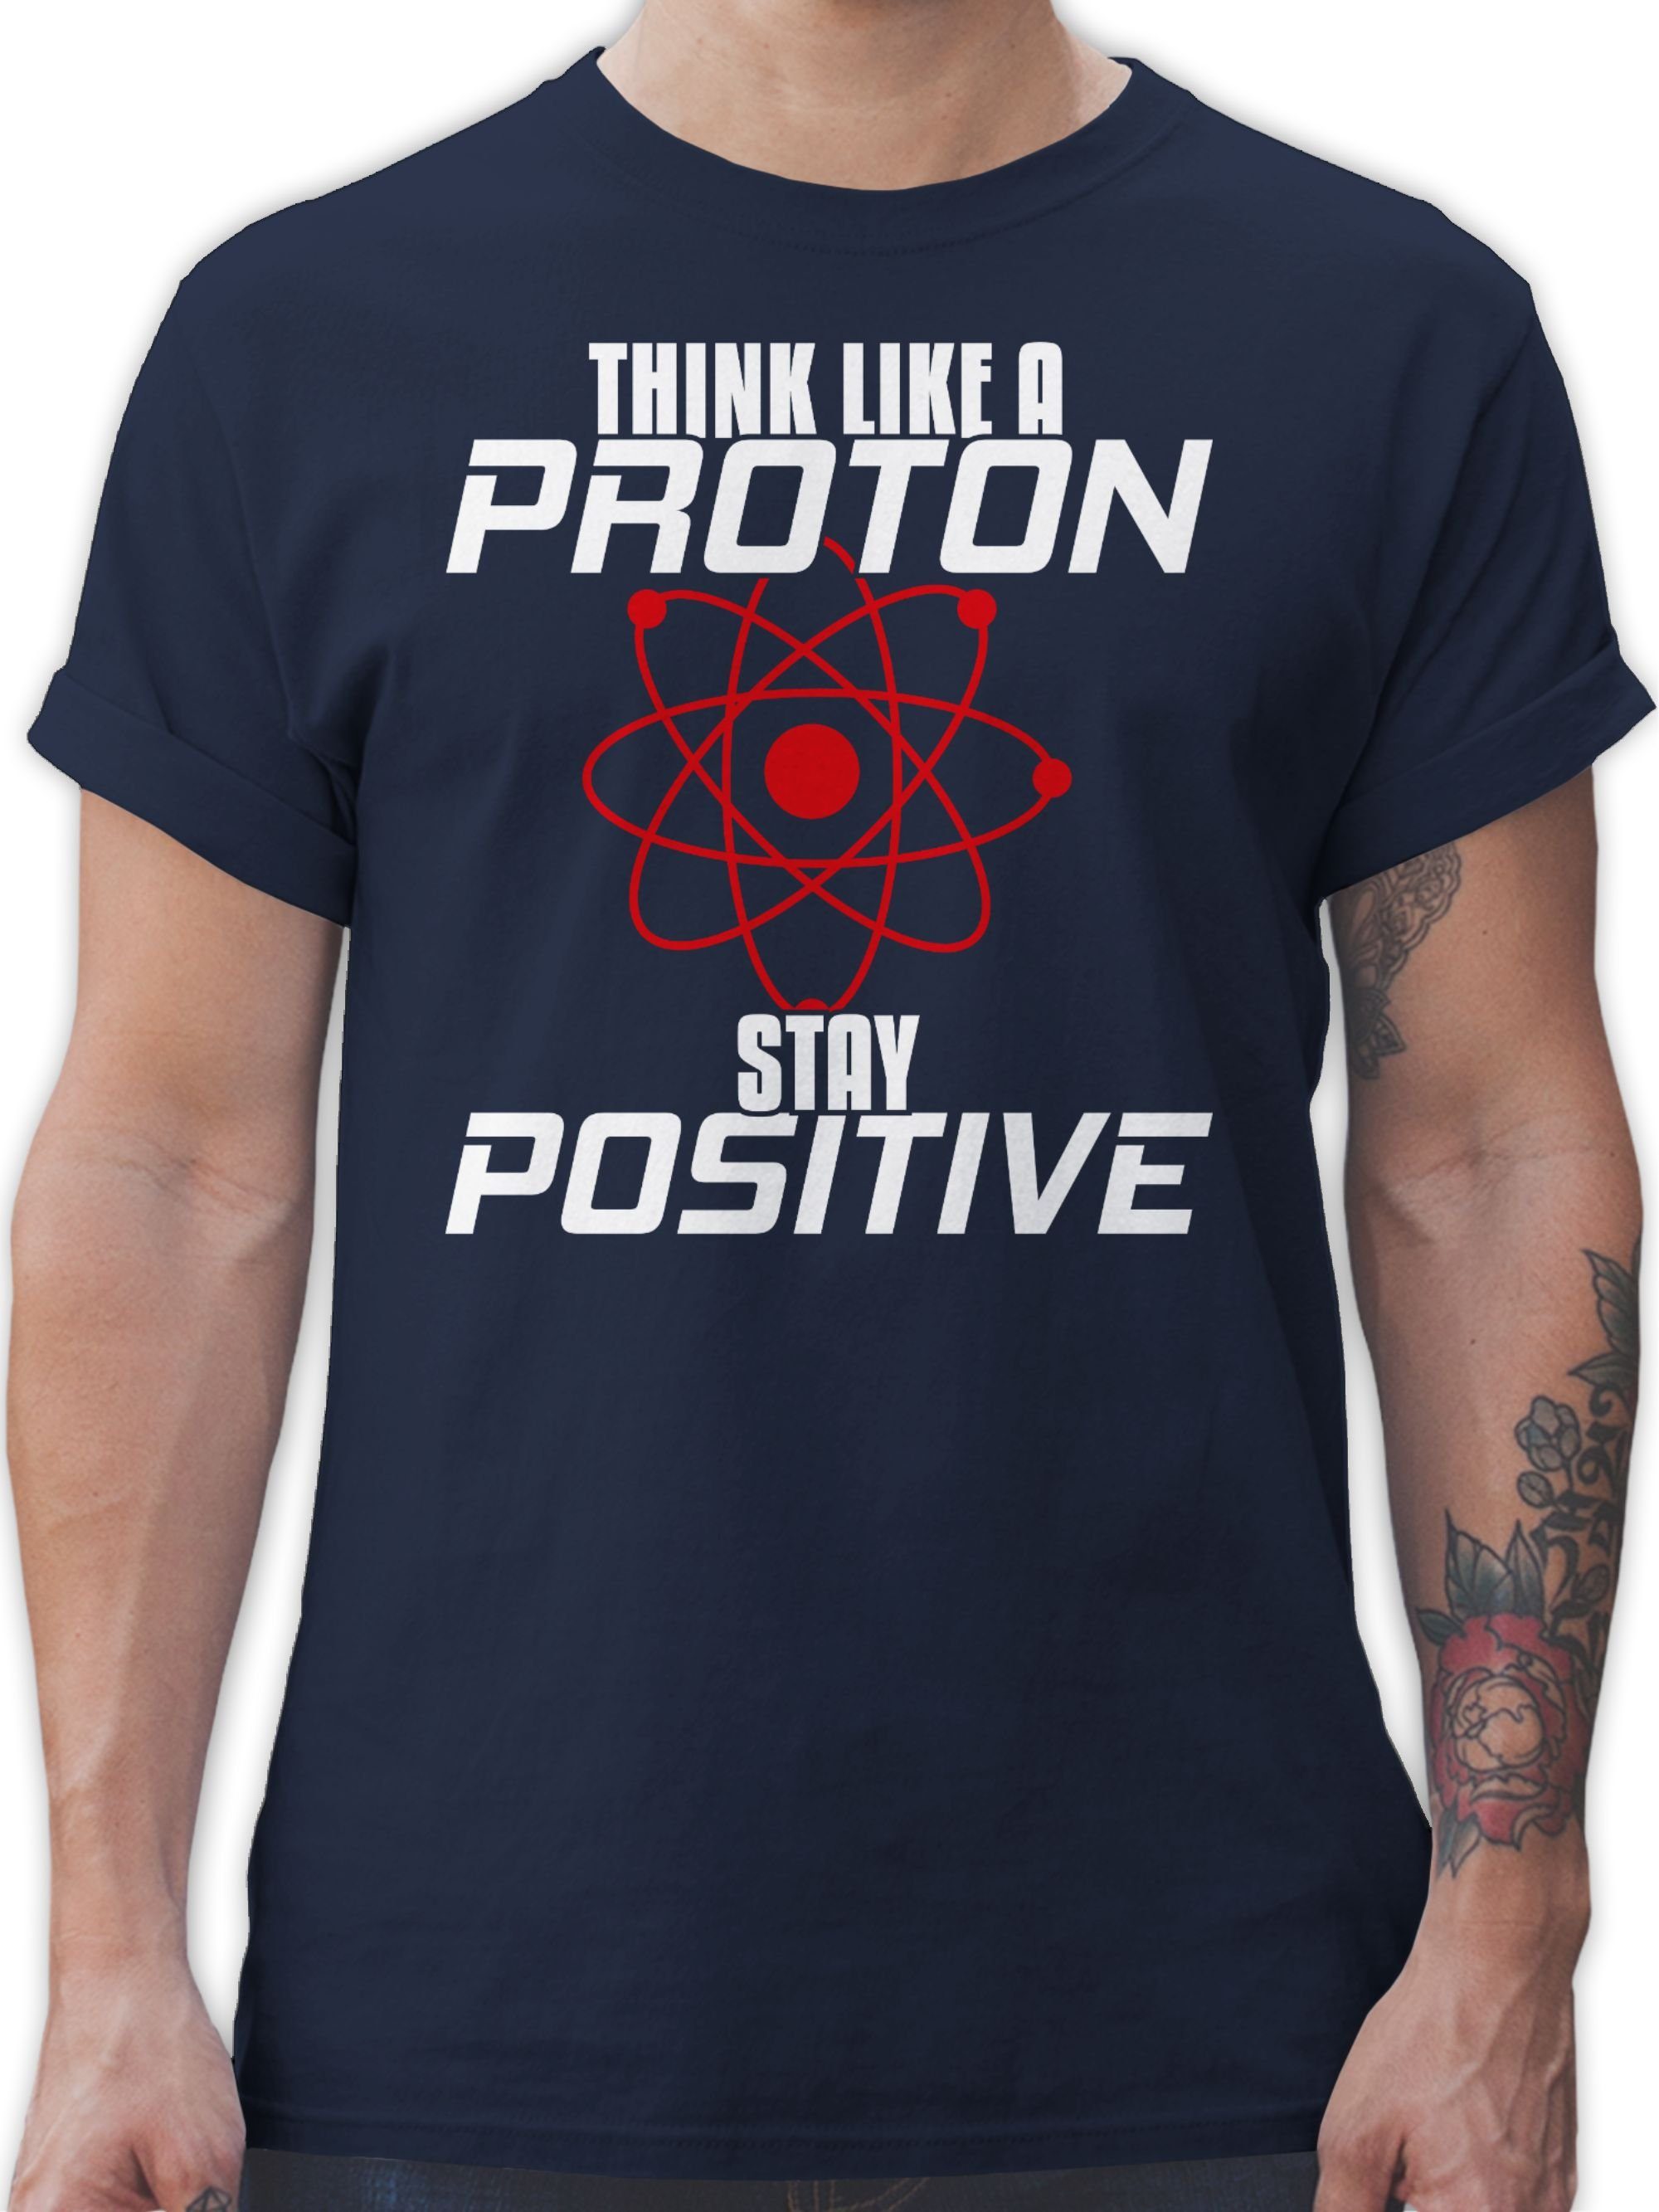 T-Shirt Blau Geschenke Think stay proton 2 Nerd Navy a like positive Shirtracer